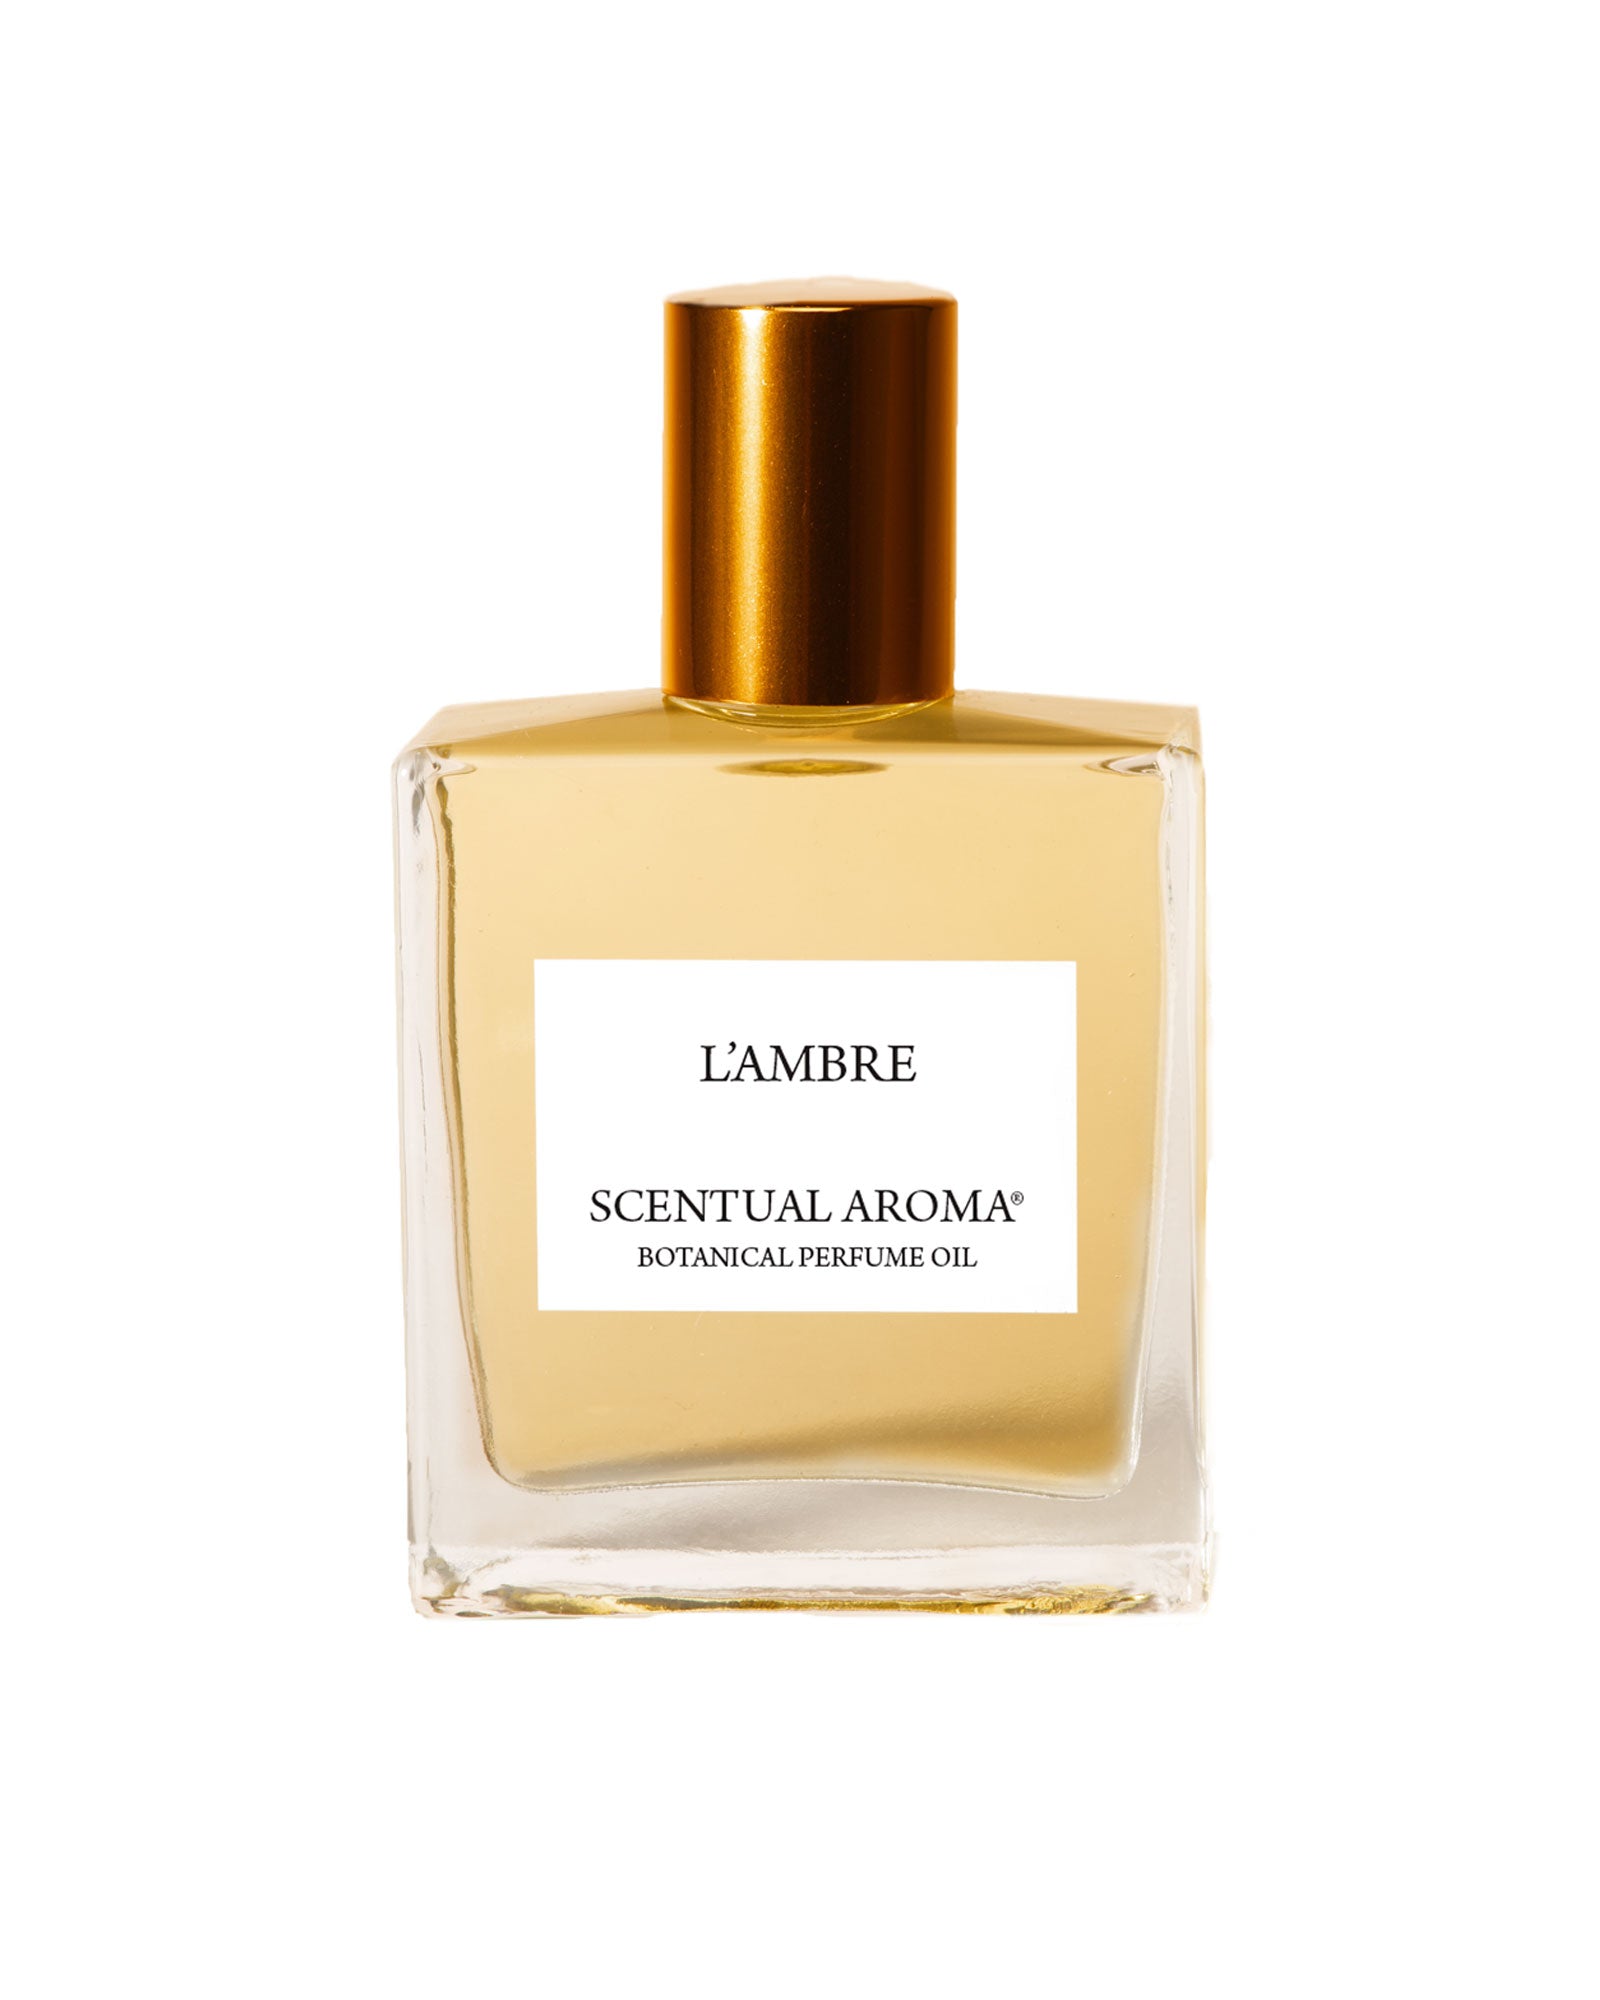 L'Ambre Botanical Perfume Oil